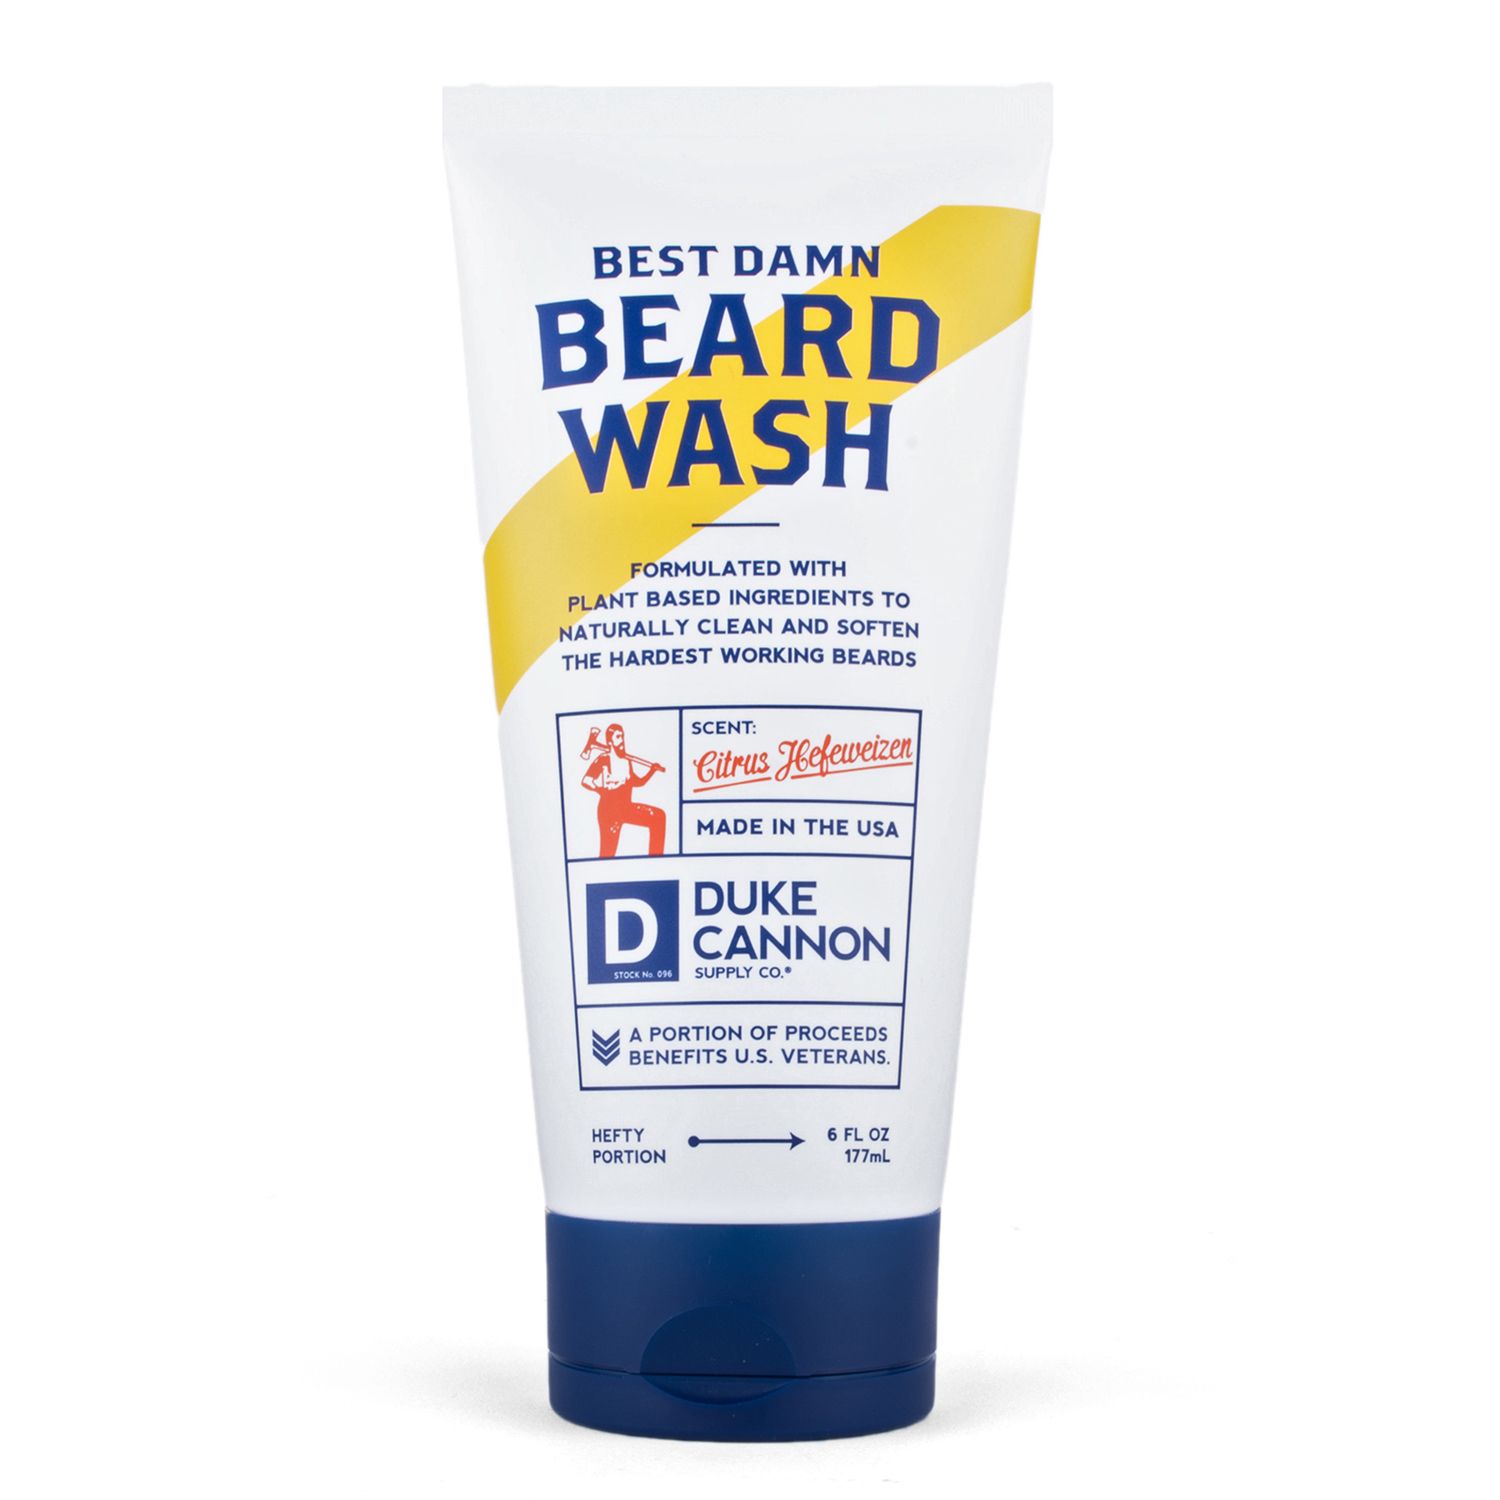 Image for Duke Cannon Supply Co. Beard Wash at Kohl's.